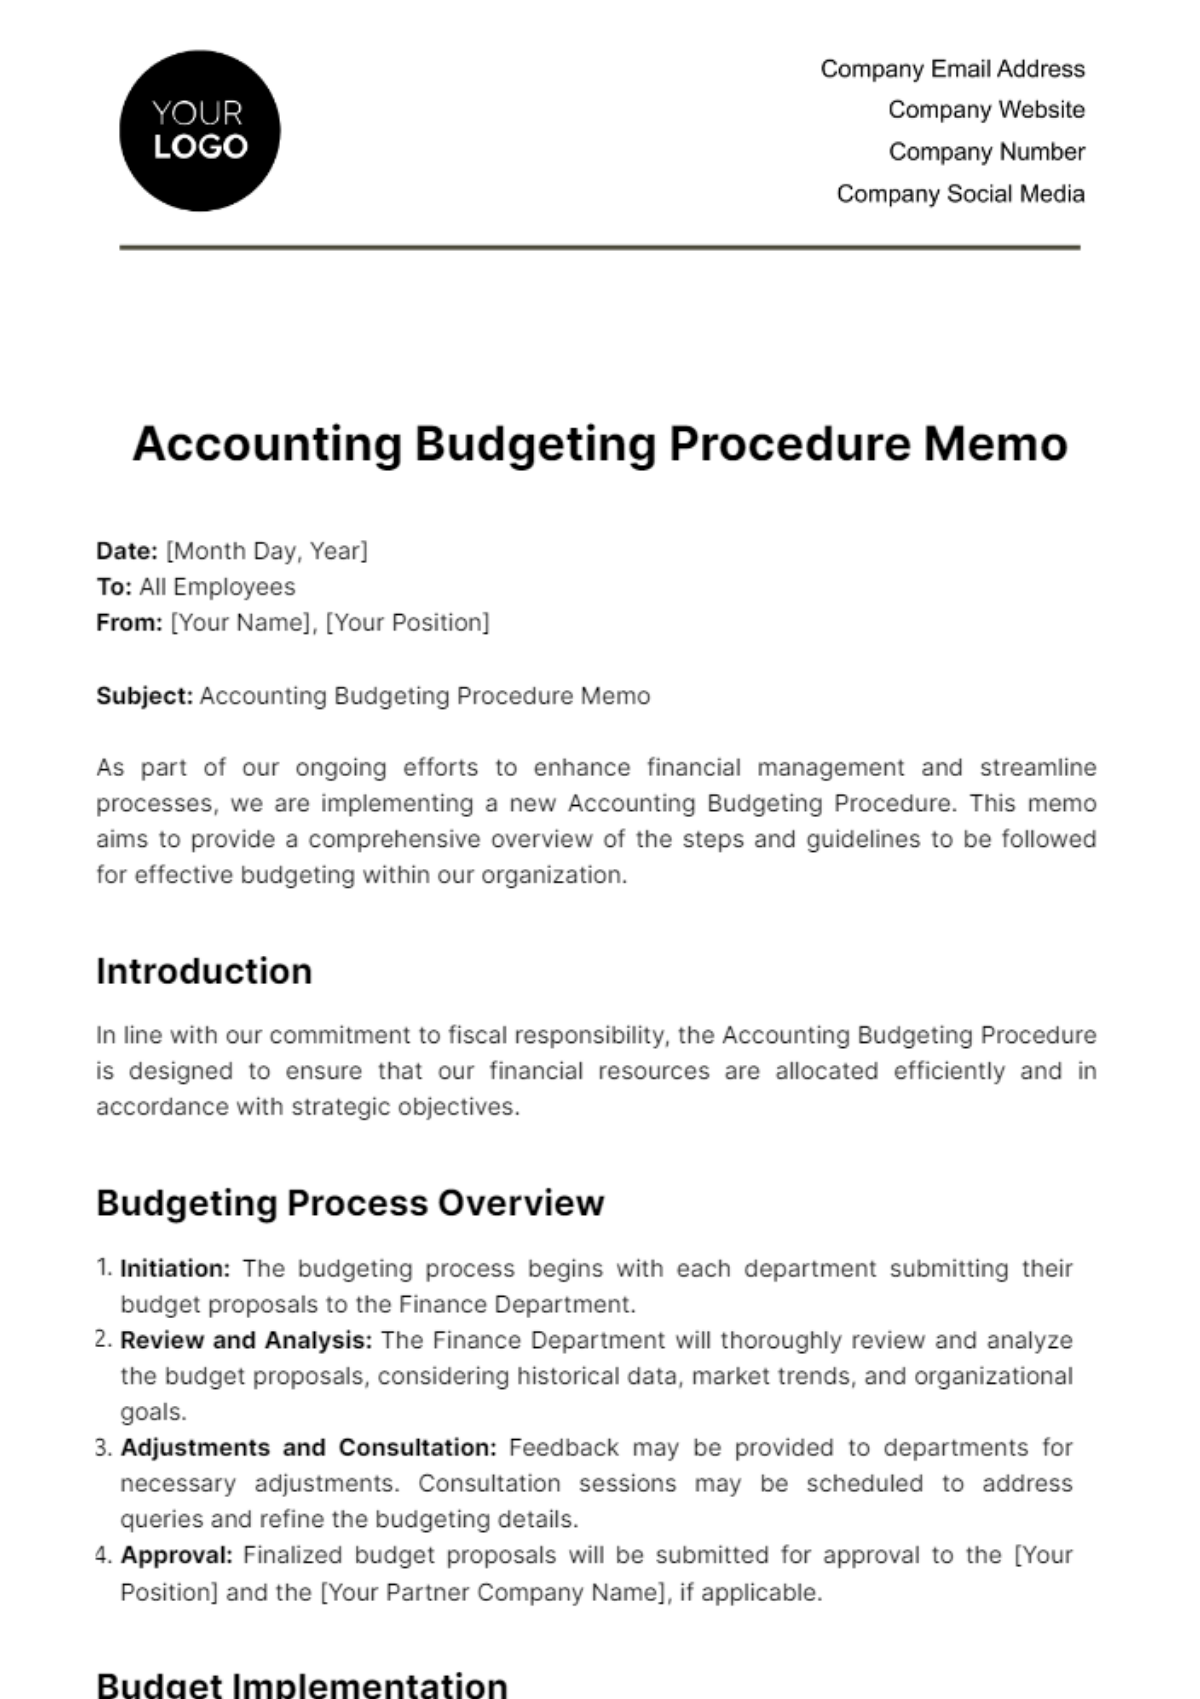 Free Accounting Budgeting Procedure Memo Template